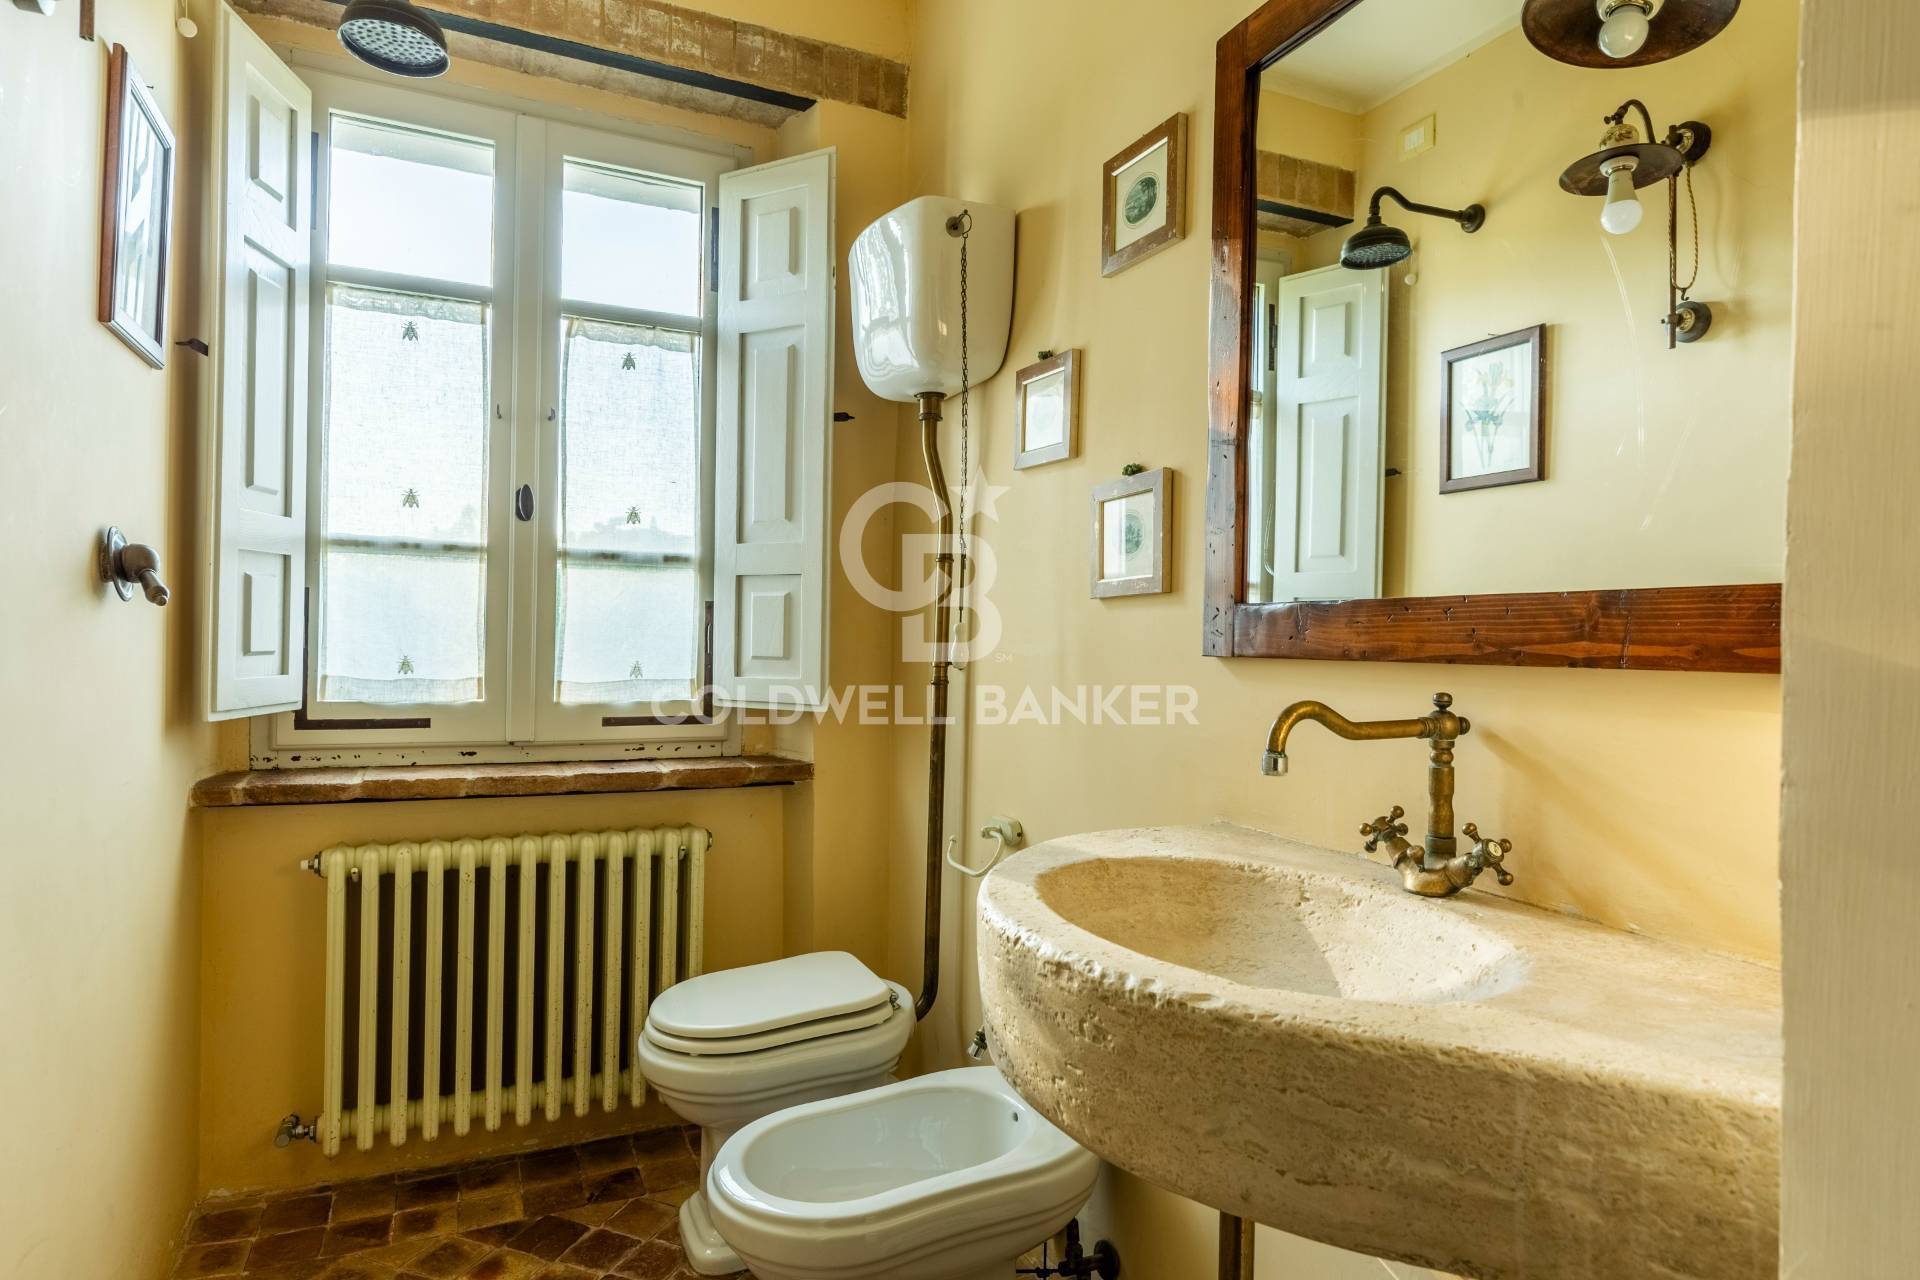 Fraz. Resina, Perugia, Perugia, 06100, IT, 4 Bedrooms Bedrooms, ,5 BathroomsBathrooms,Residential,For Sale,Fraz. Resina,1440613